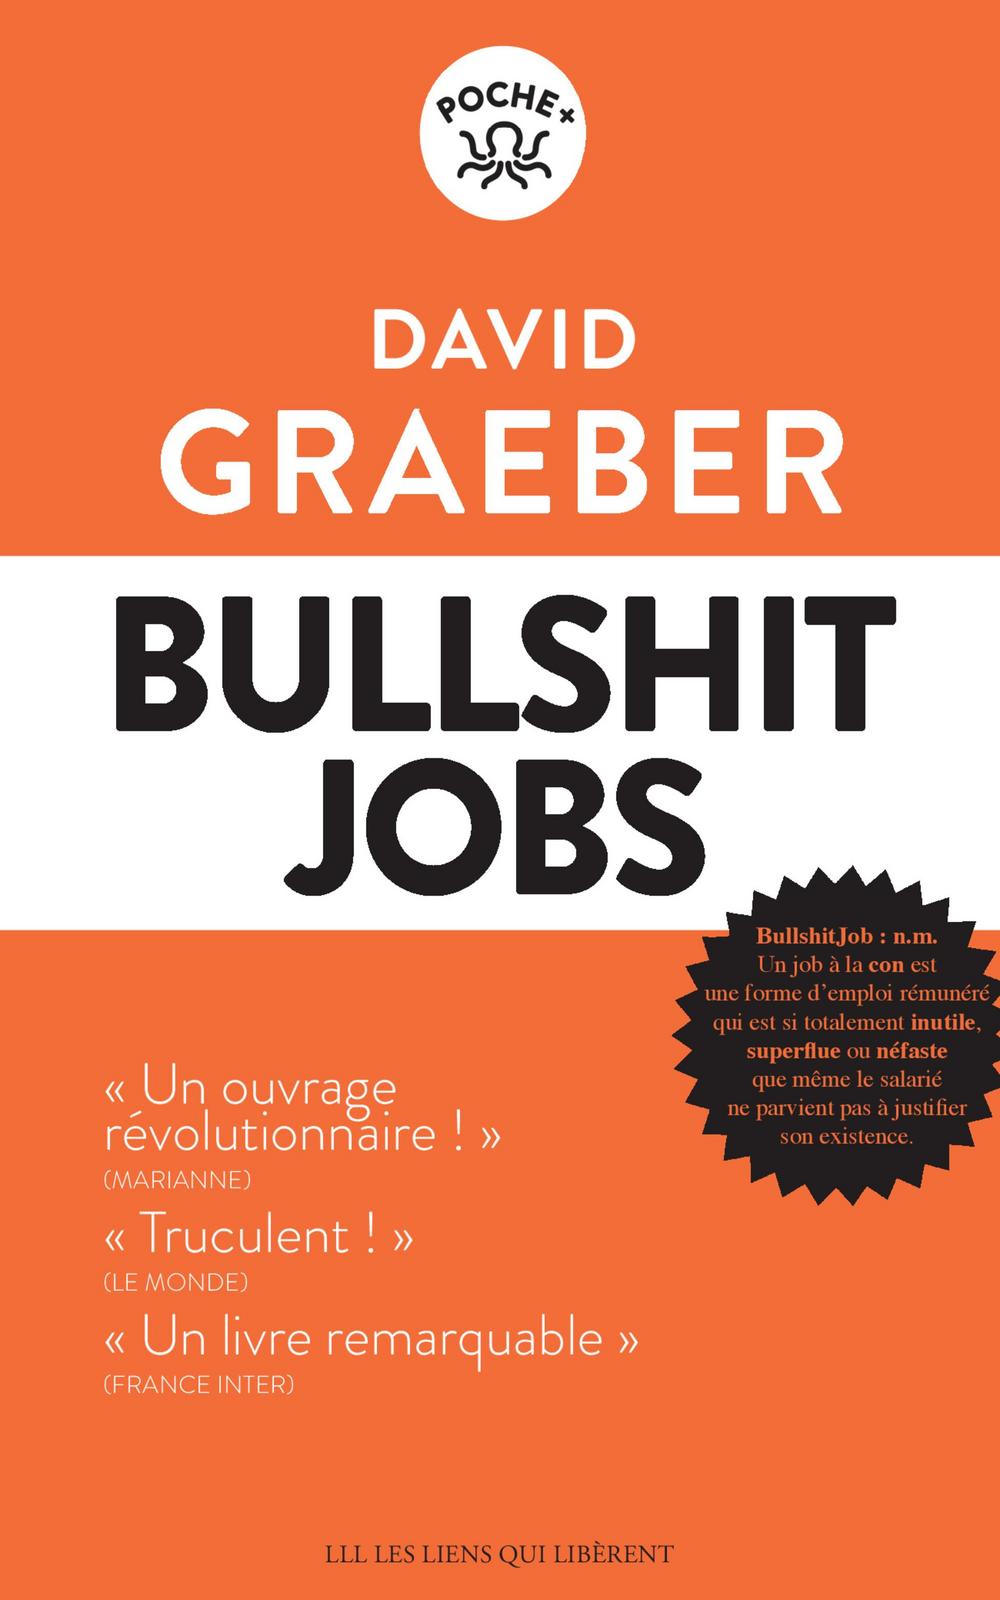 David Graeber: Bullshit jobs (French language, 2019, Les liens qui libèrent)